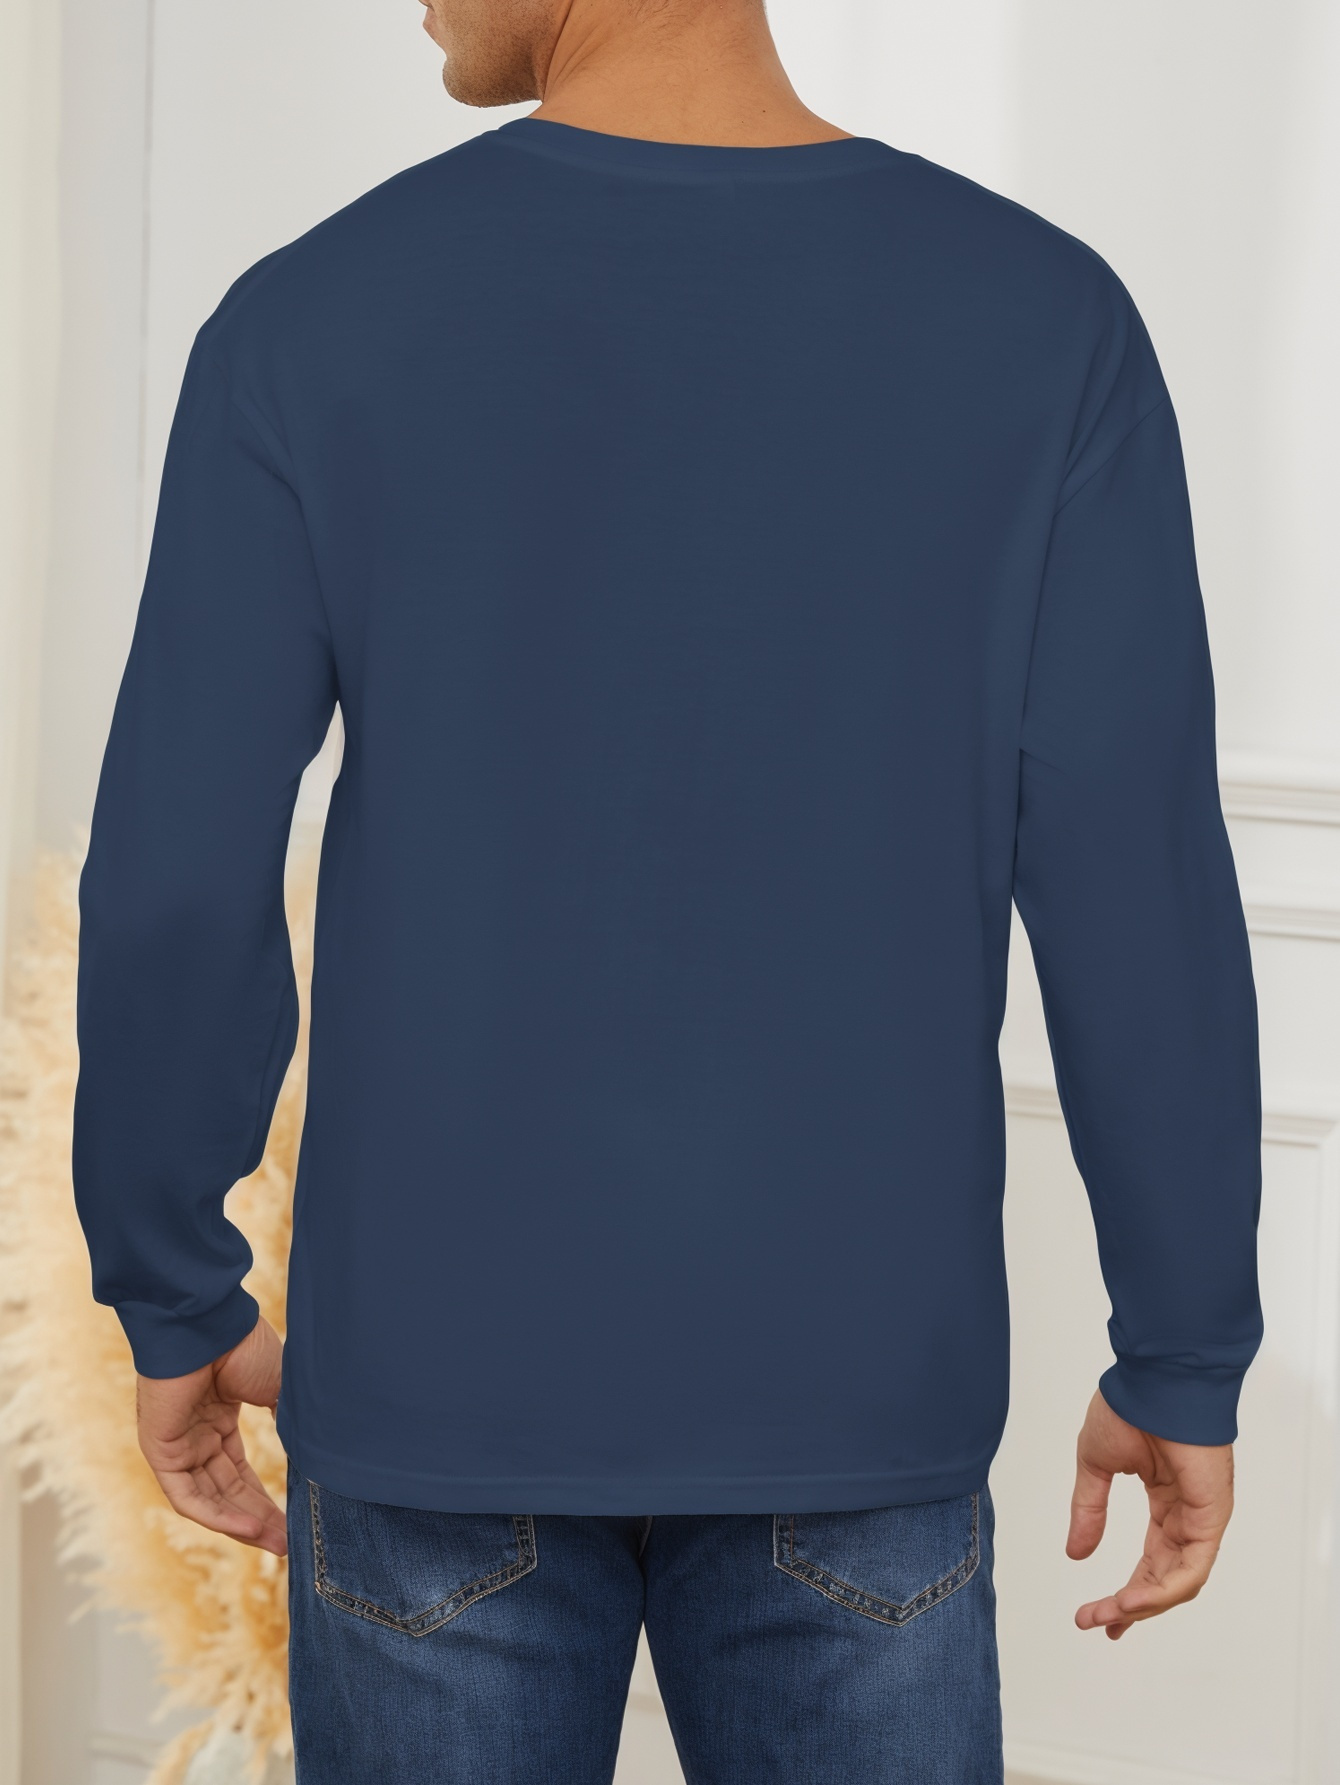 Buy Men Blue Crew Neck Full Sleeves Casual Sweatshirt Online